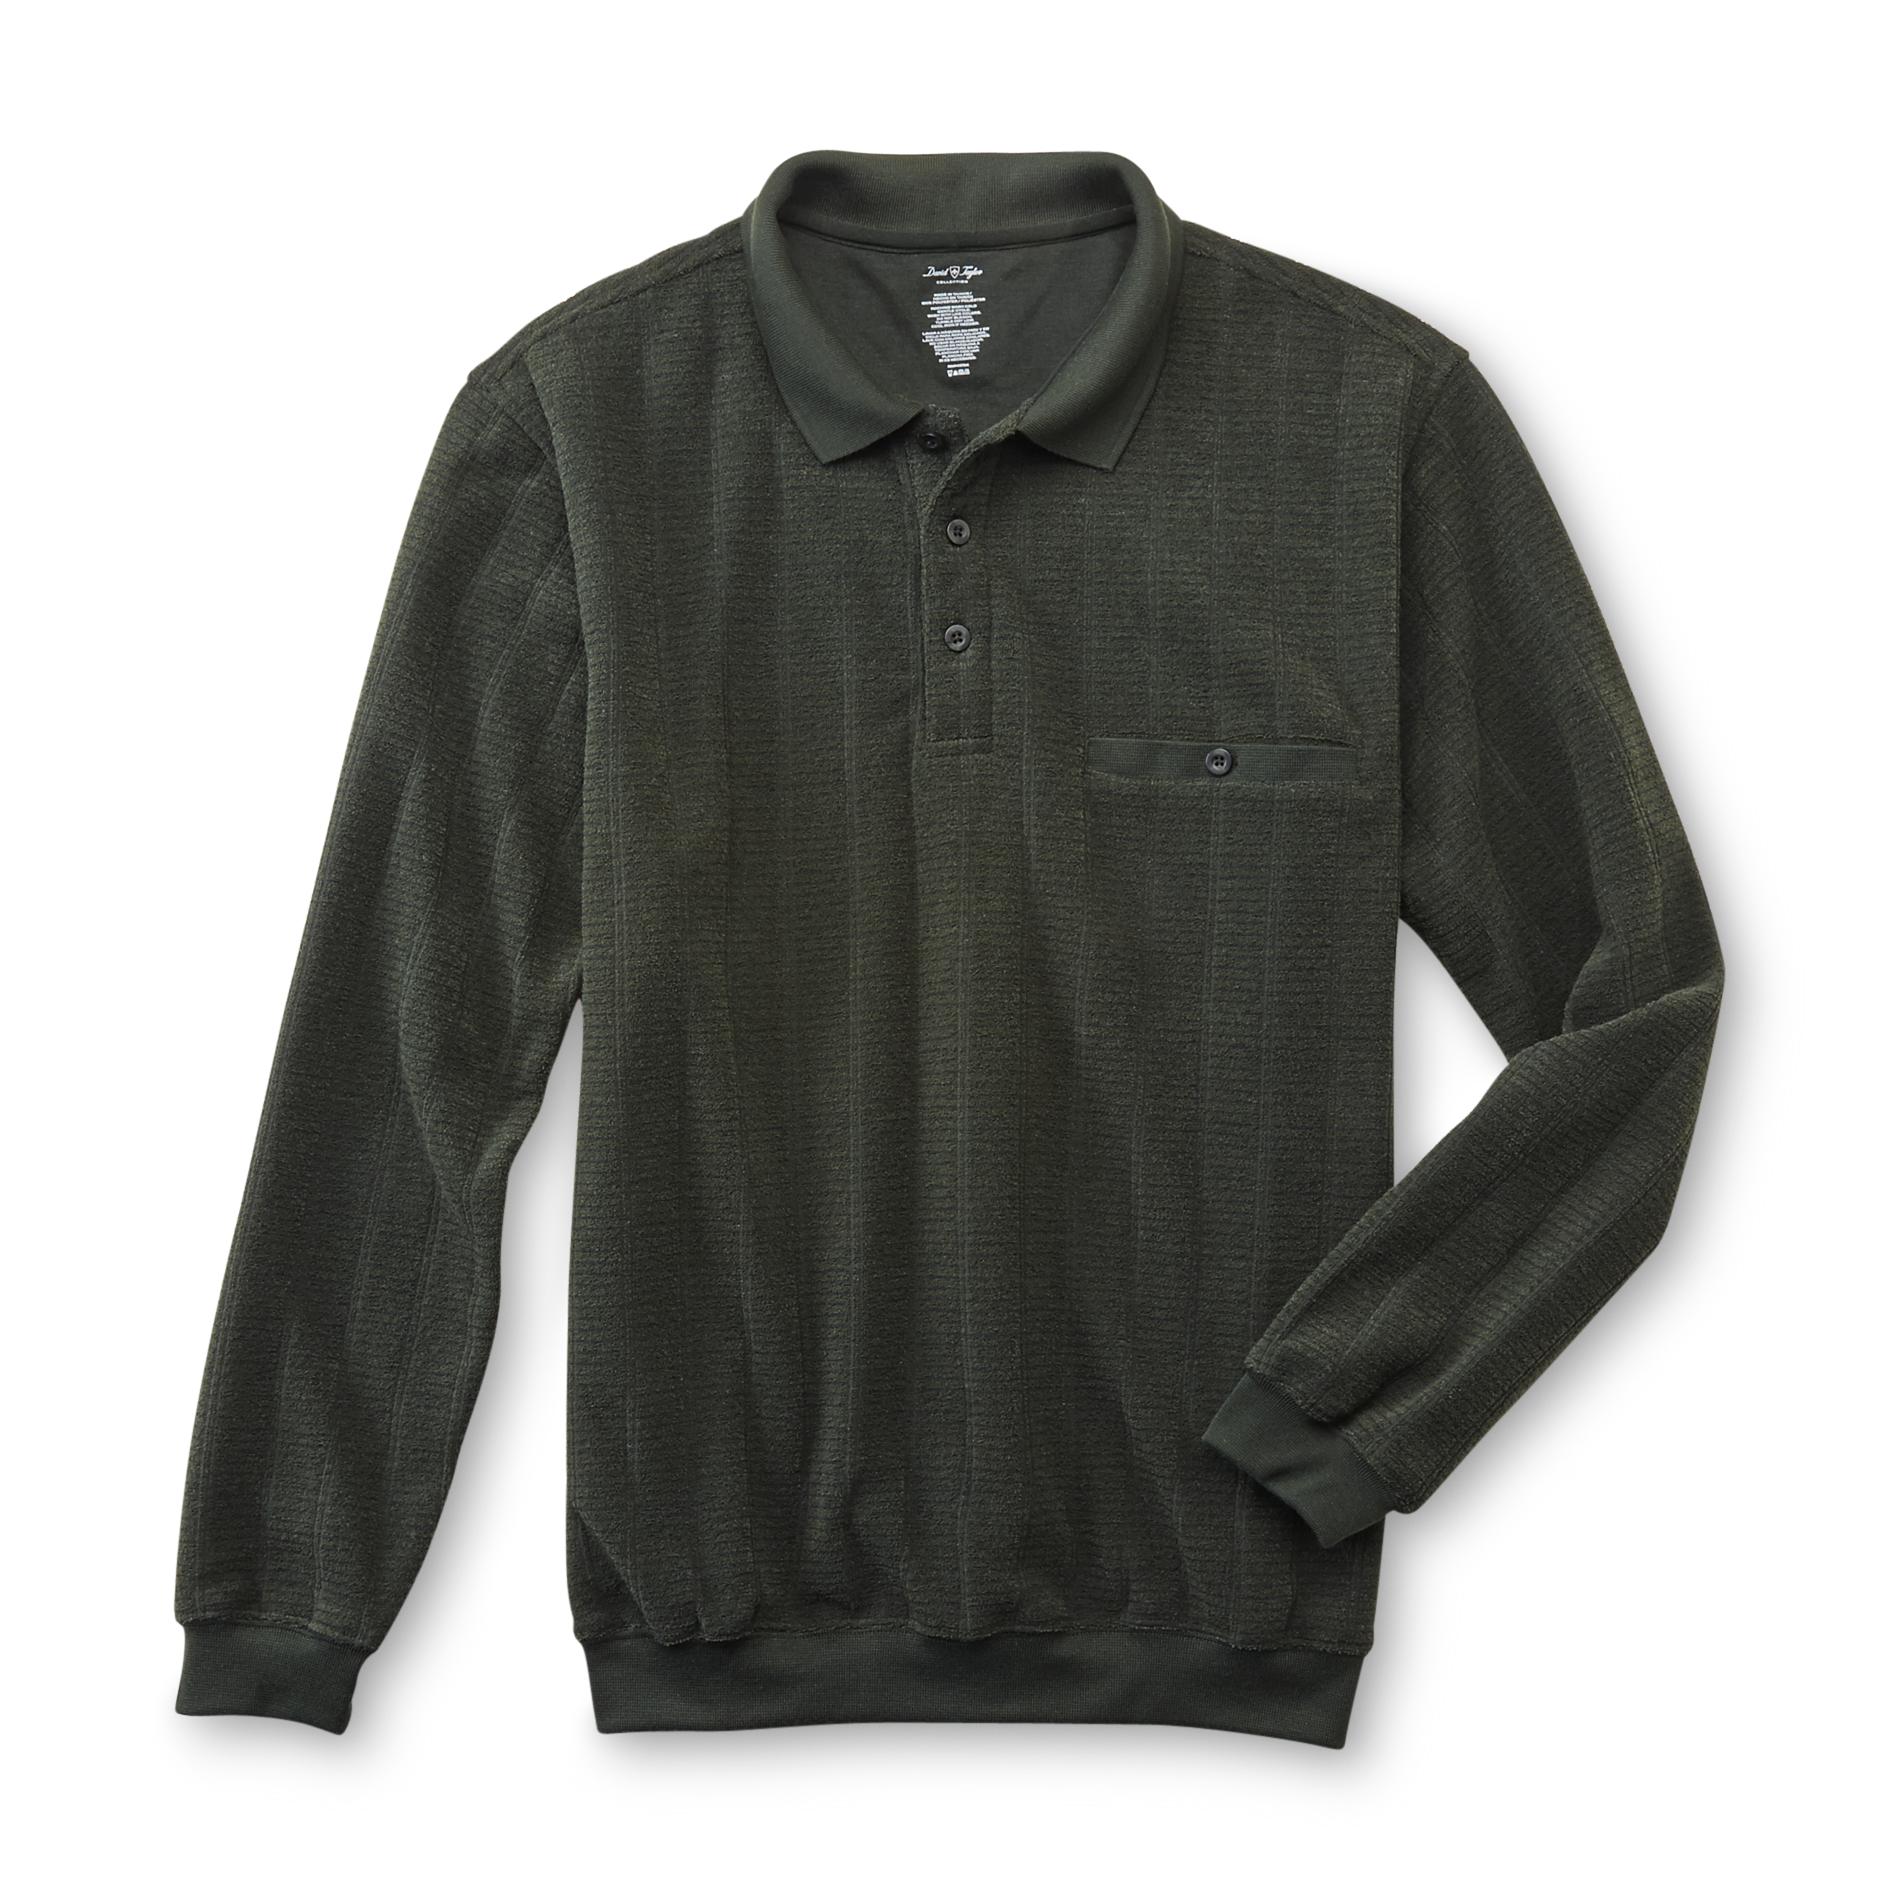 David Taylor Collection Men's Boucle Long-Sleeve Polo Shirt - Grid